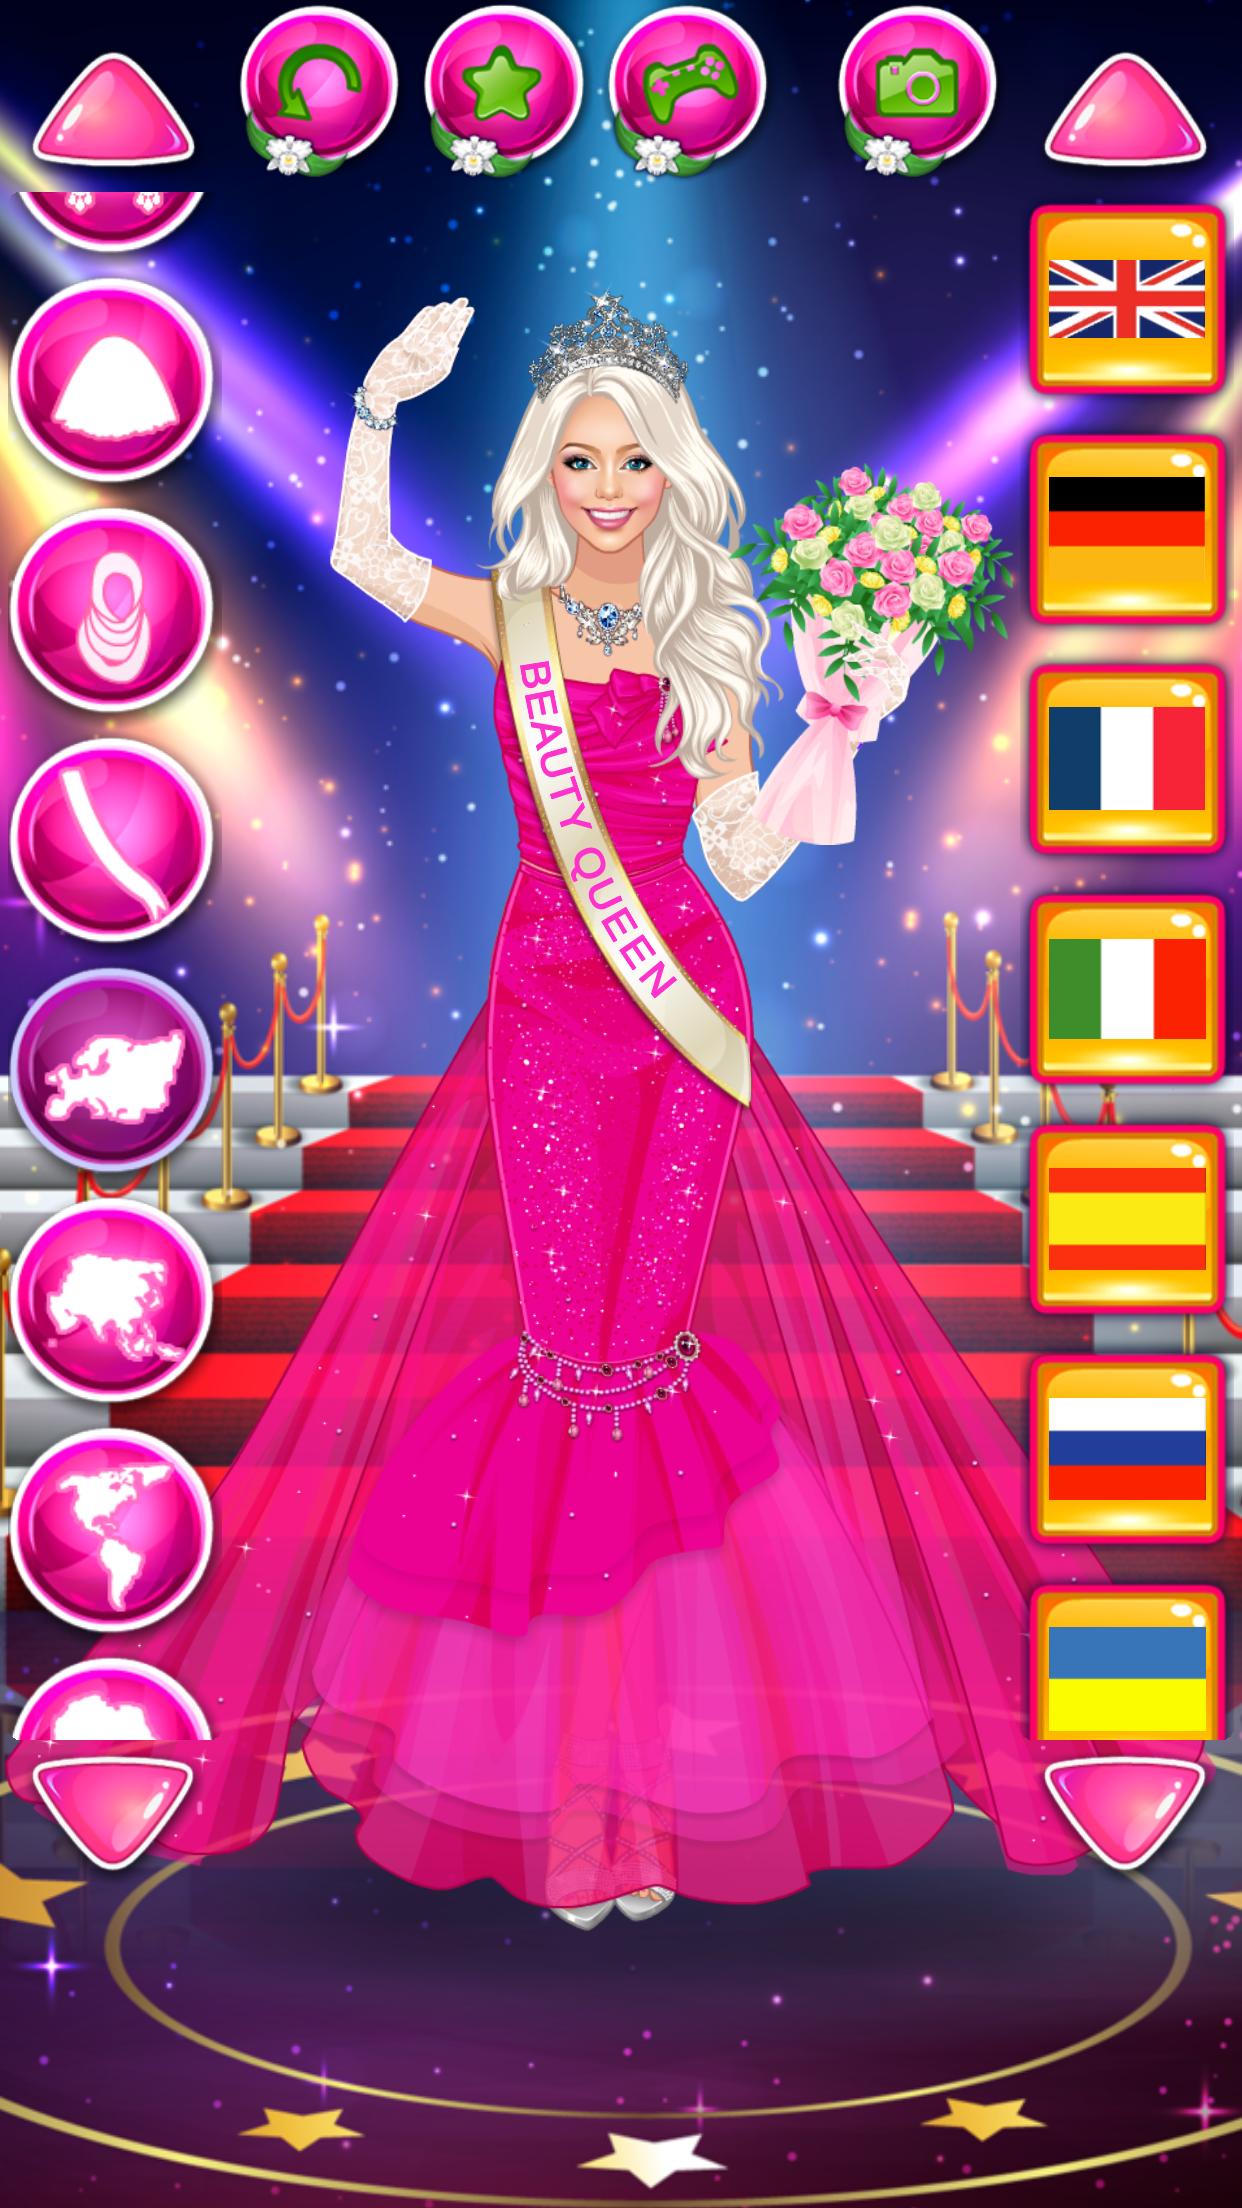 Beauty Queen Dress Up - Star Girl Fashion 1.1 Screenshot 16